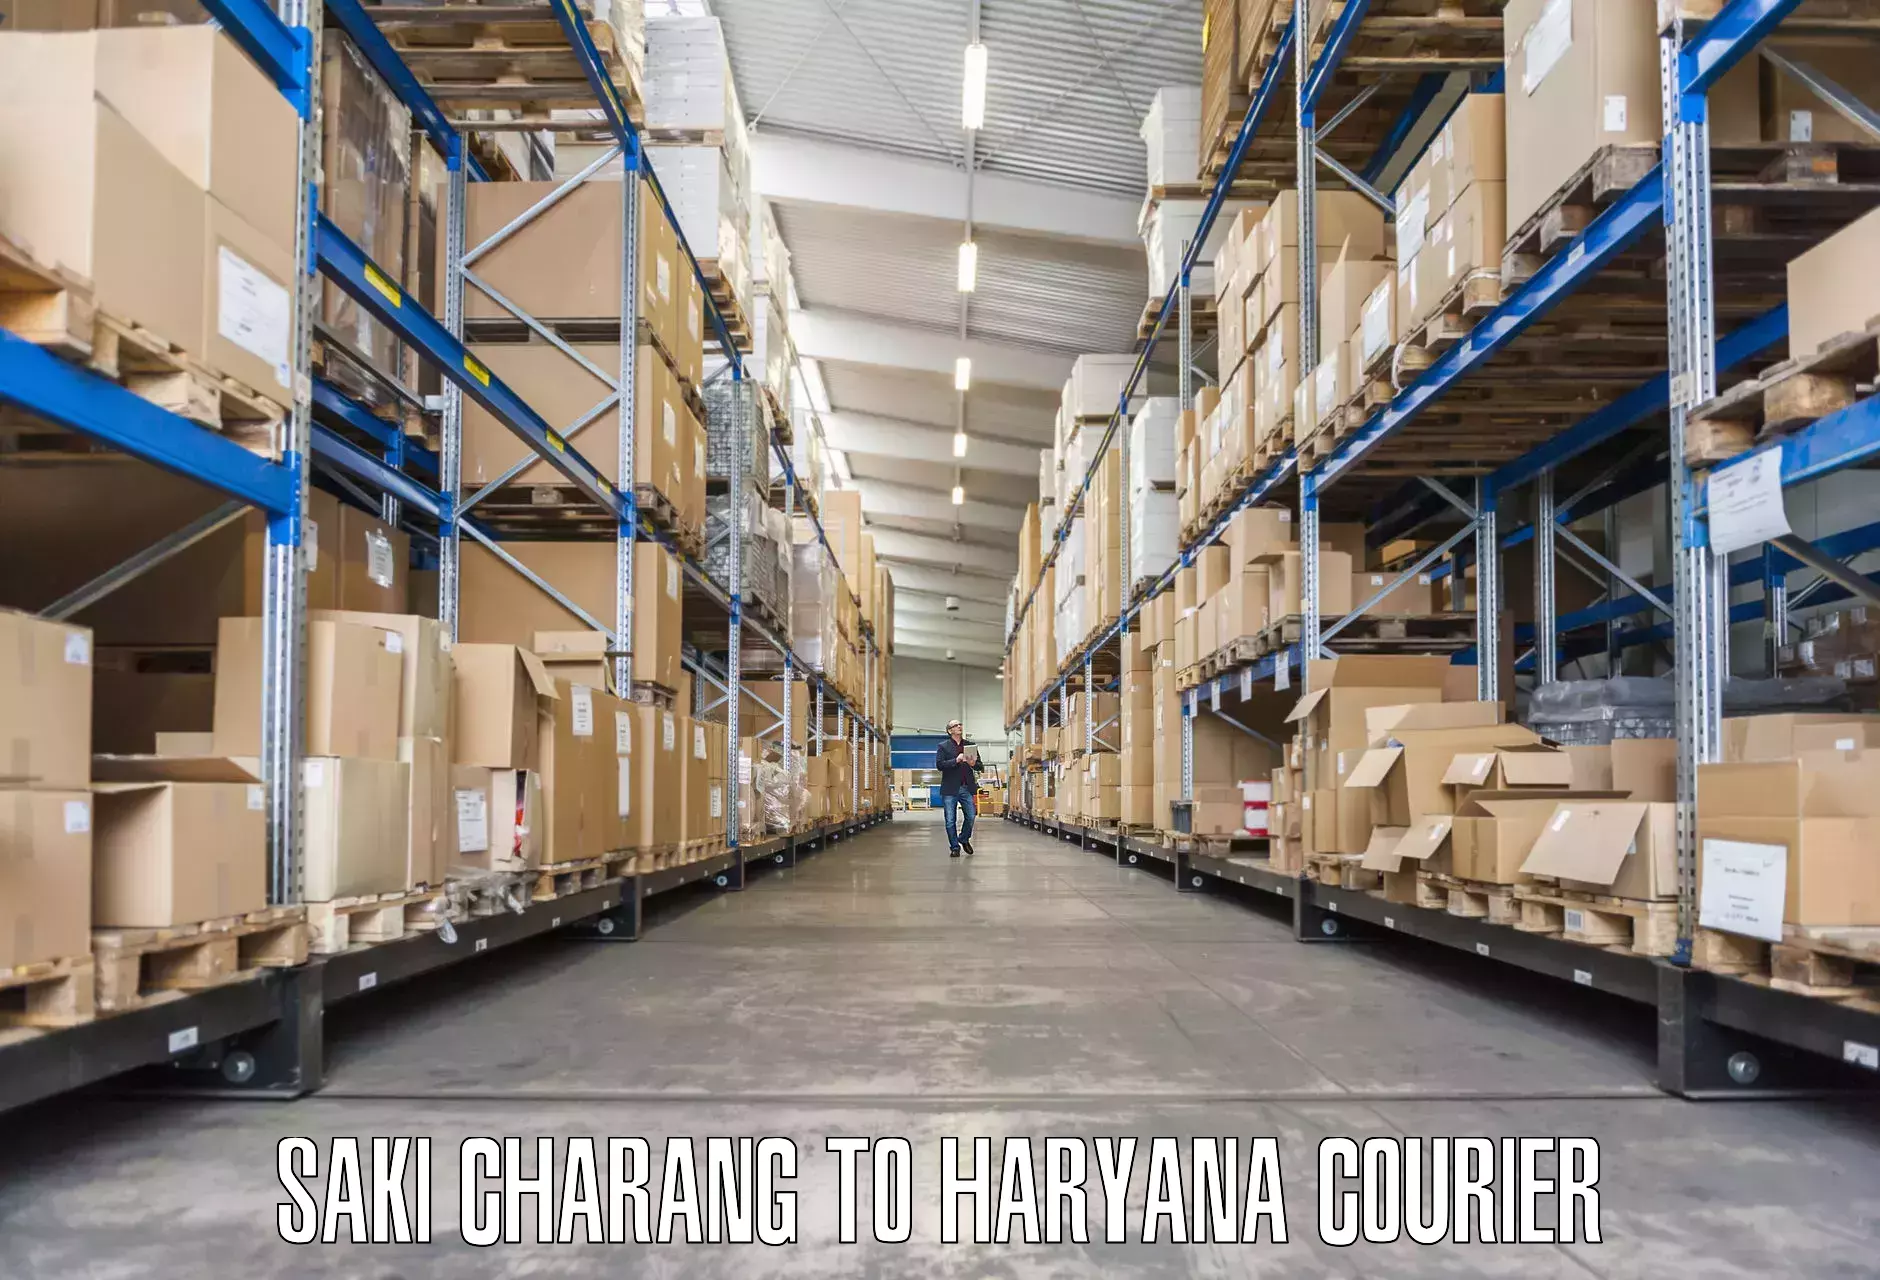 Trusted moving company Saki Charang to Haryana